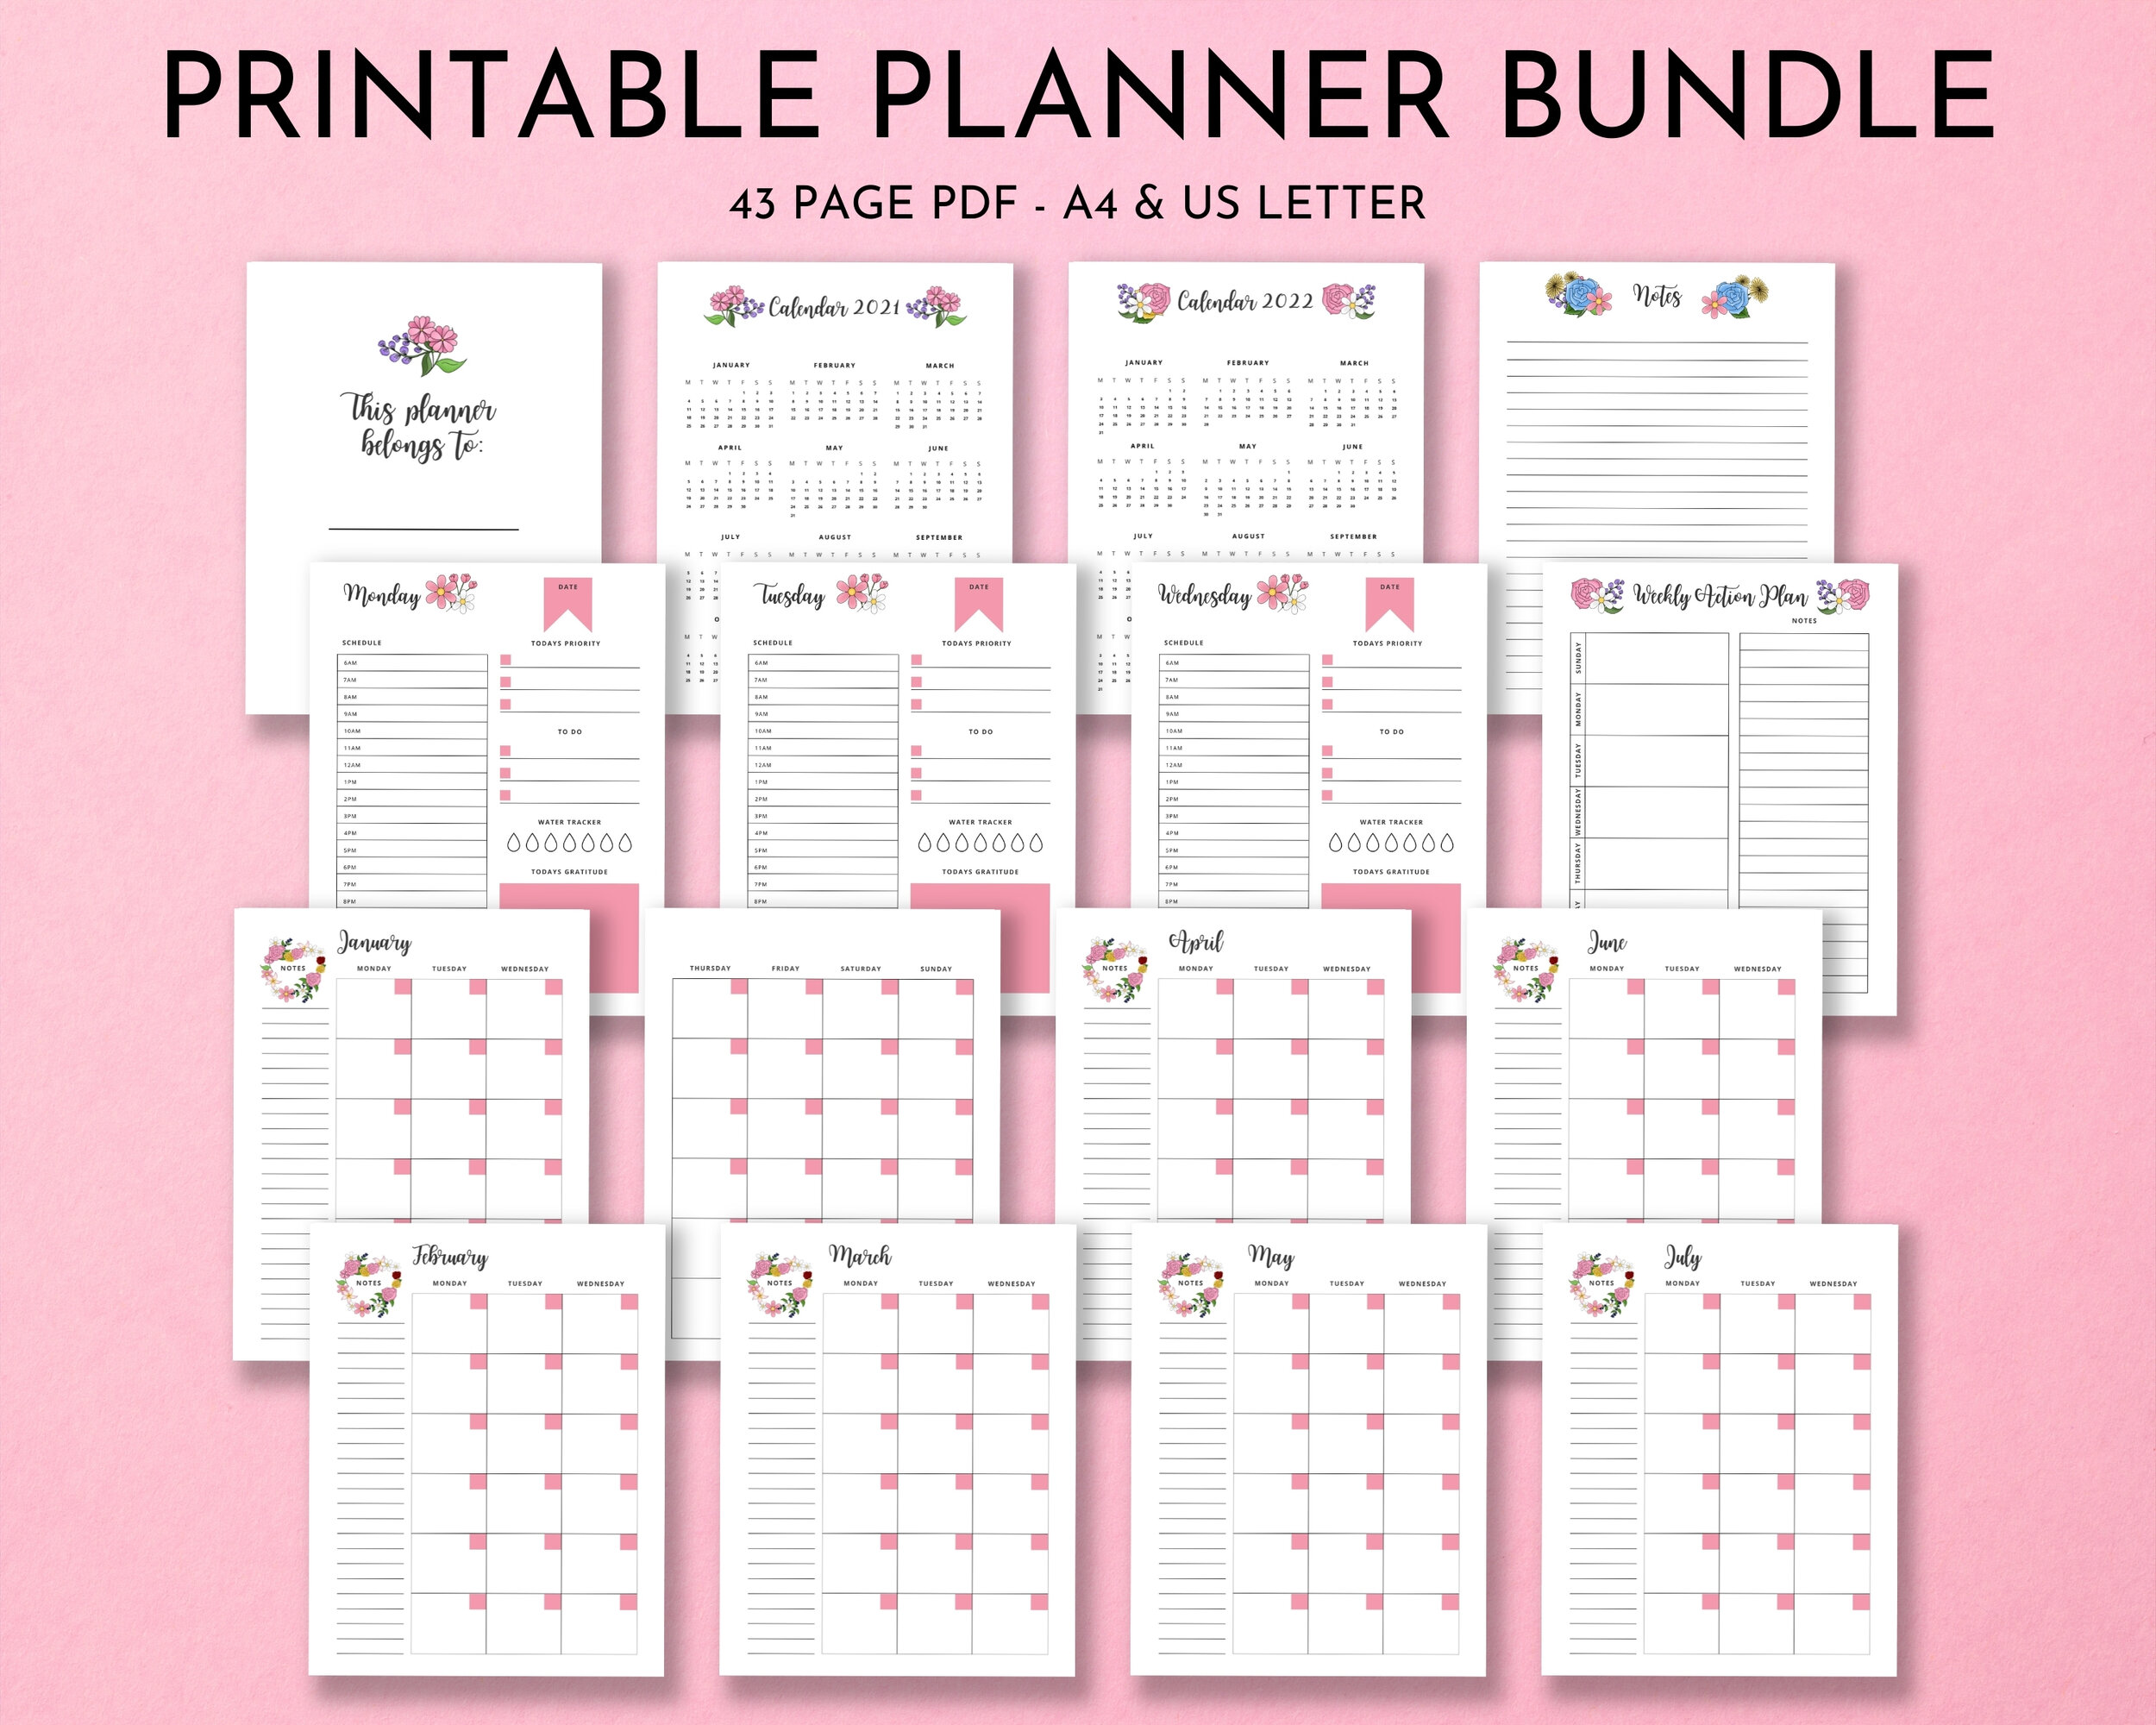 floral printable planner bundle example pages.jpg